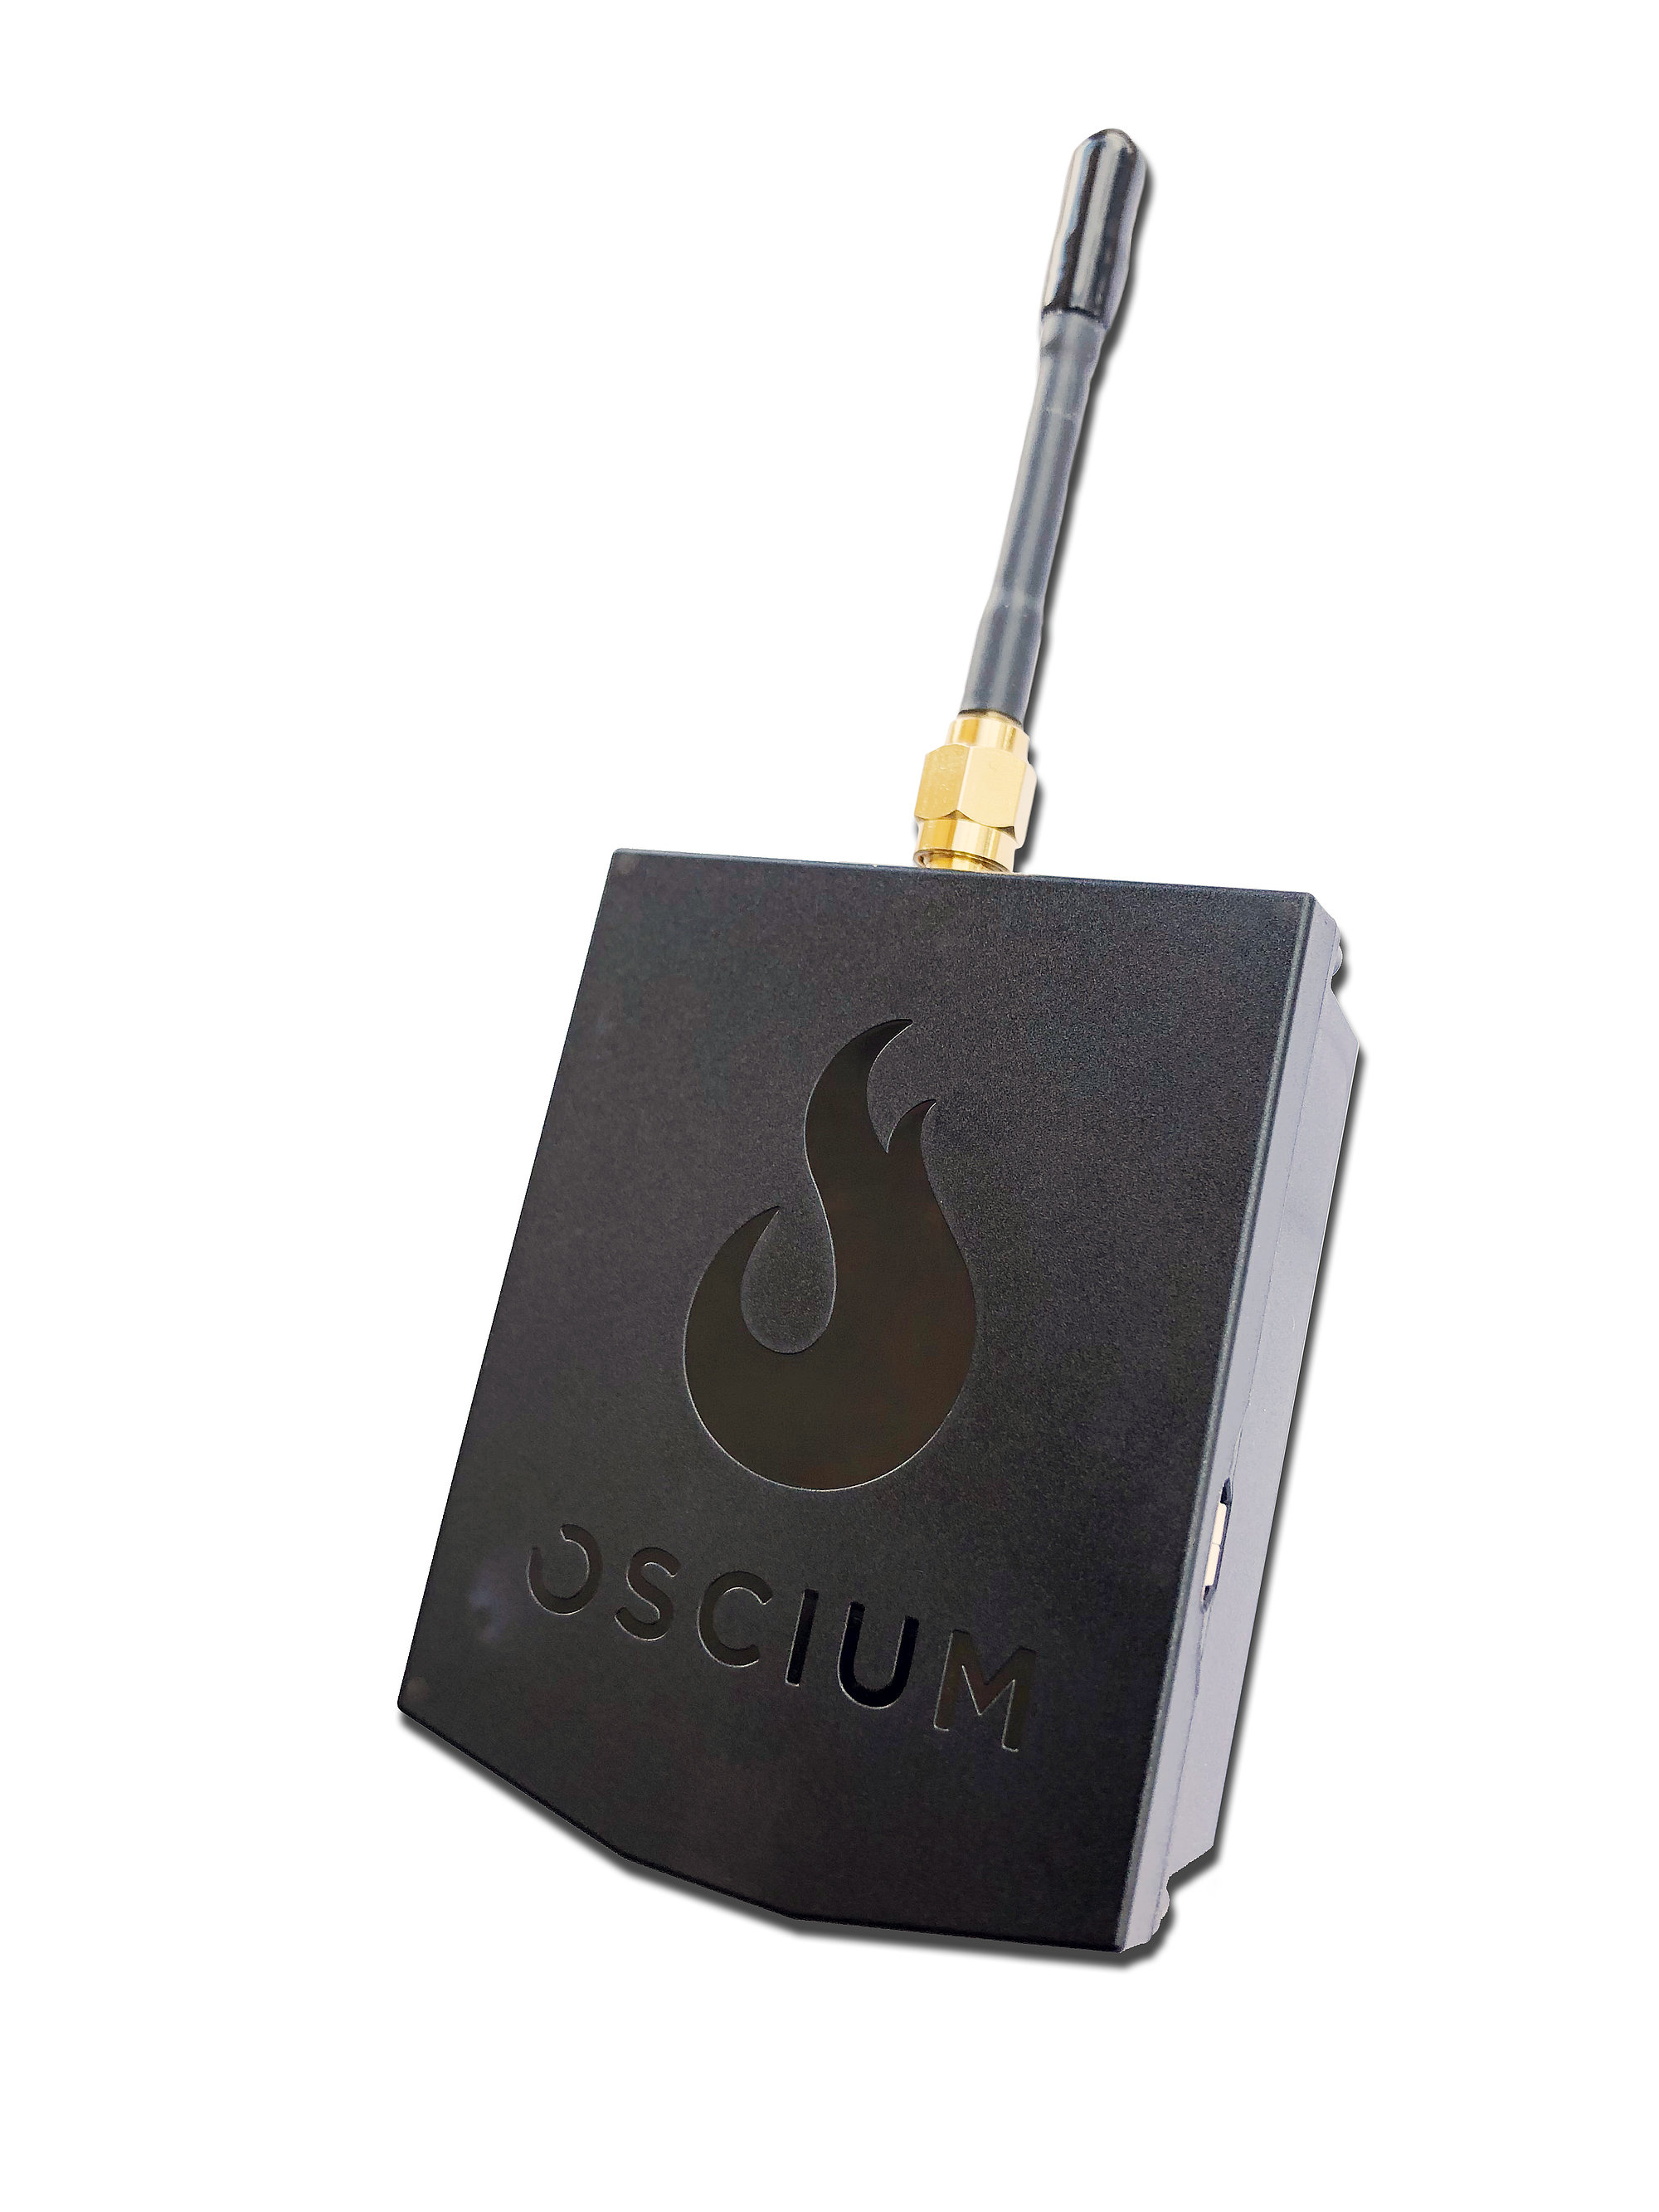 Oscium WiPry2500